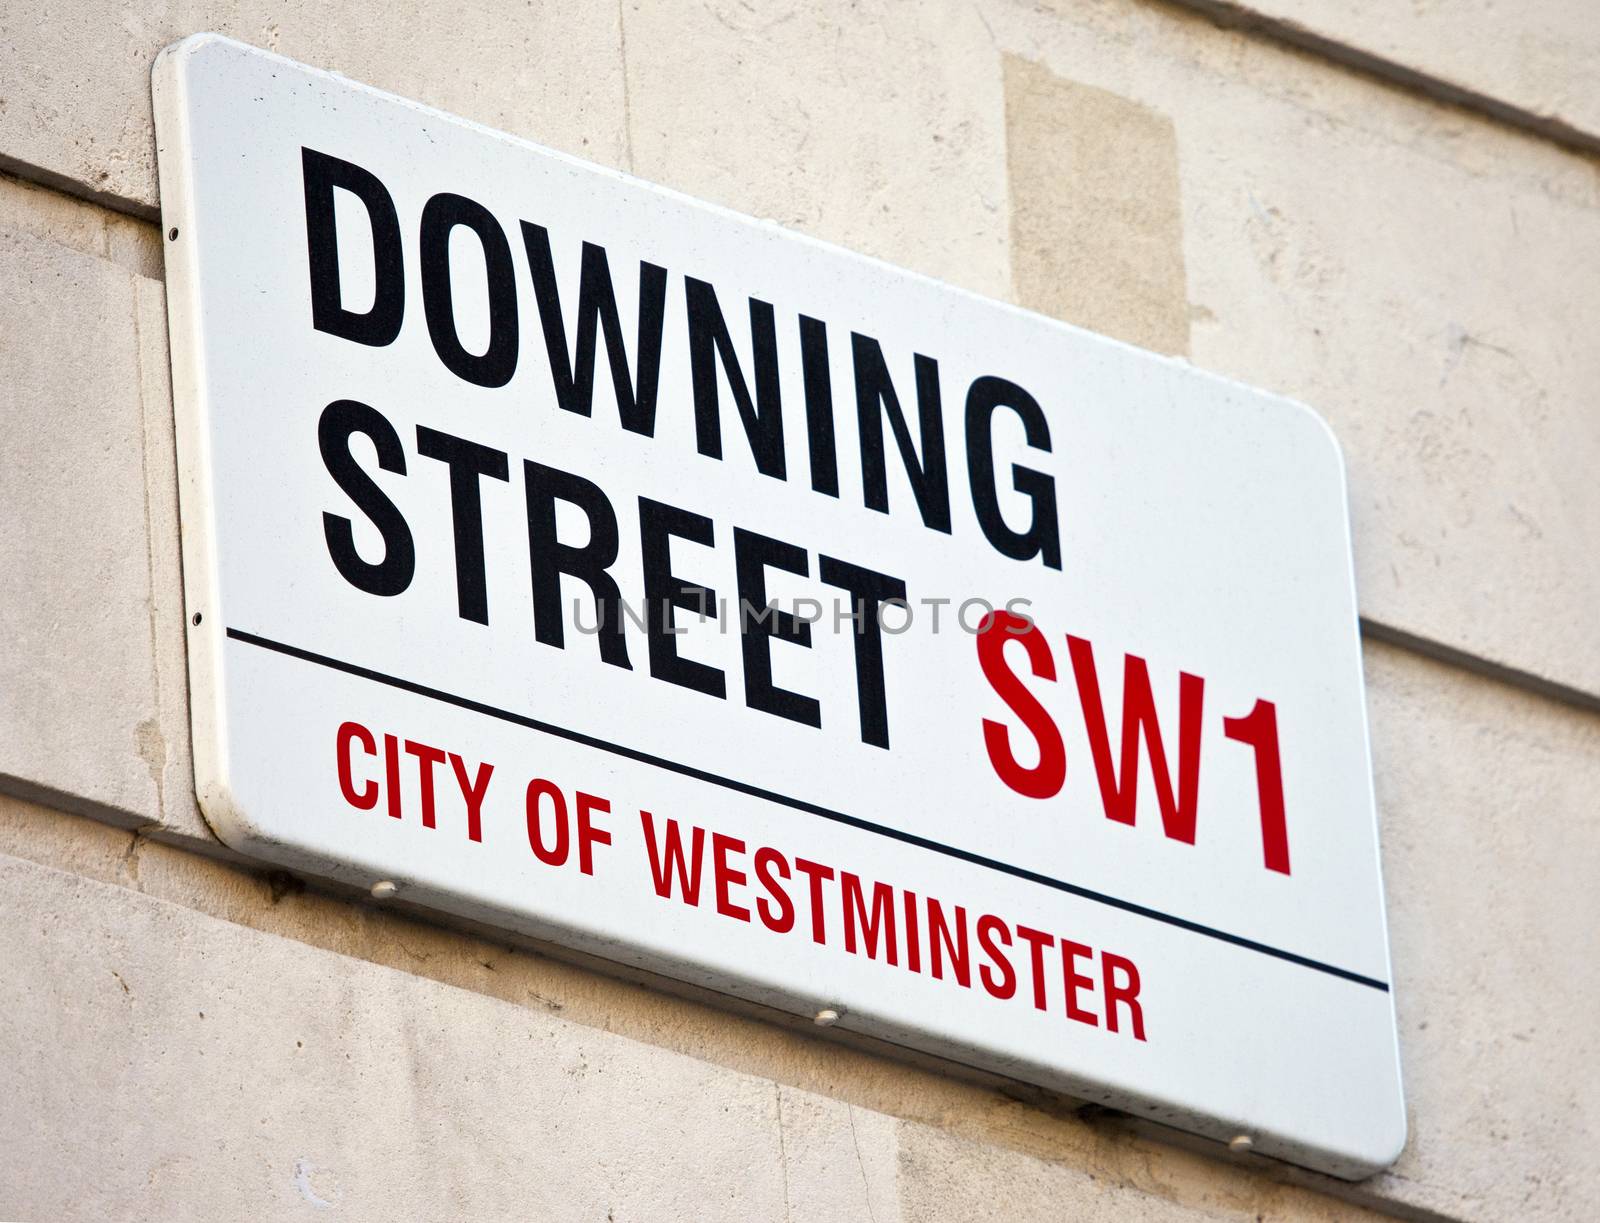 Downing Street in London by chrisdorney